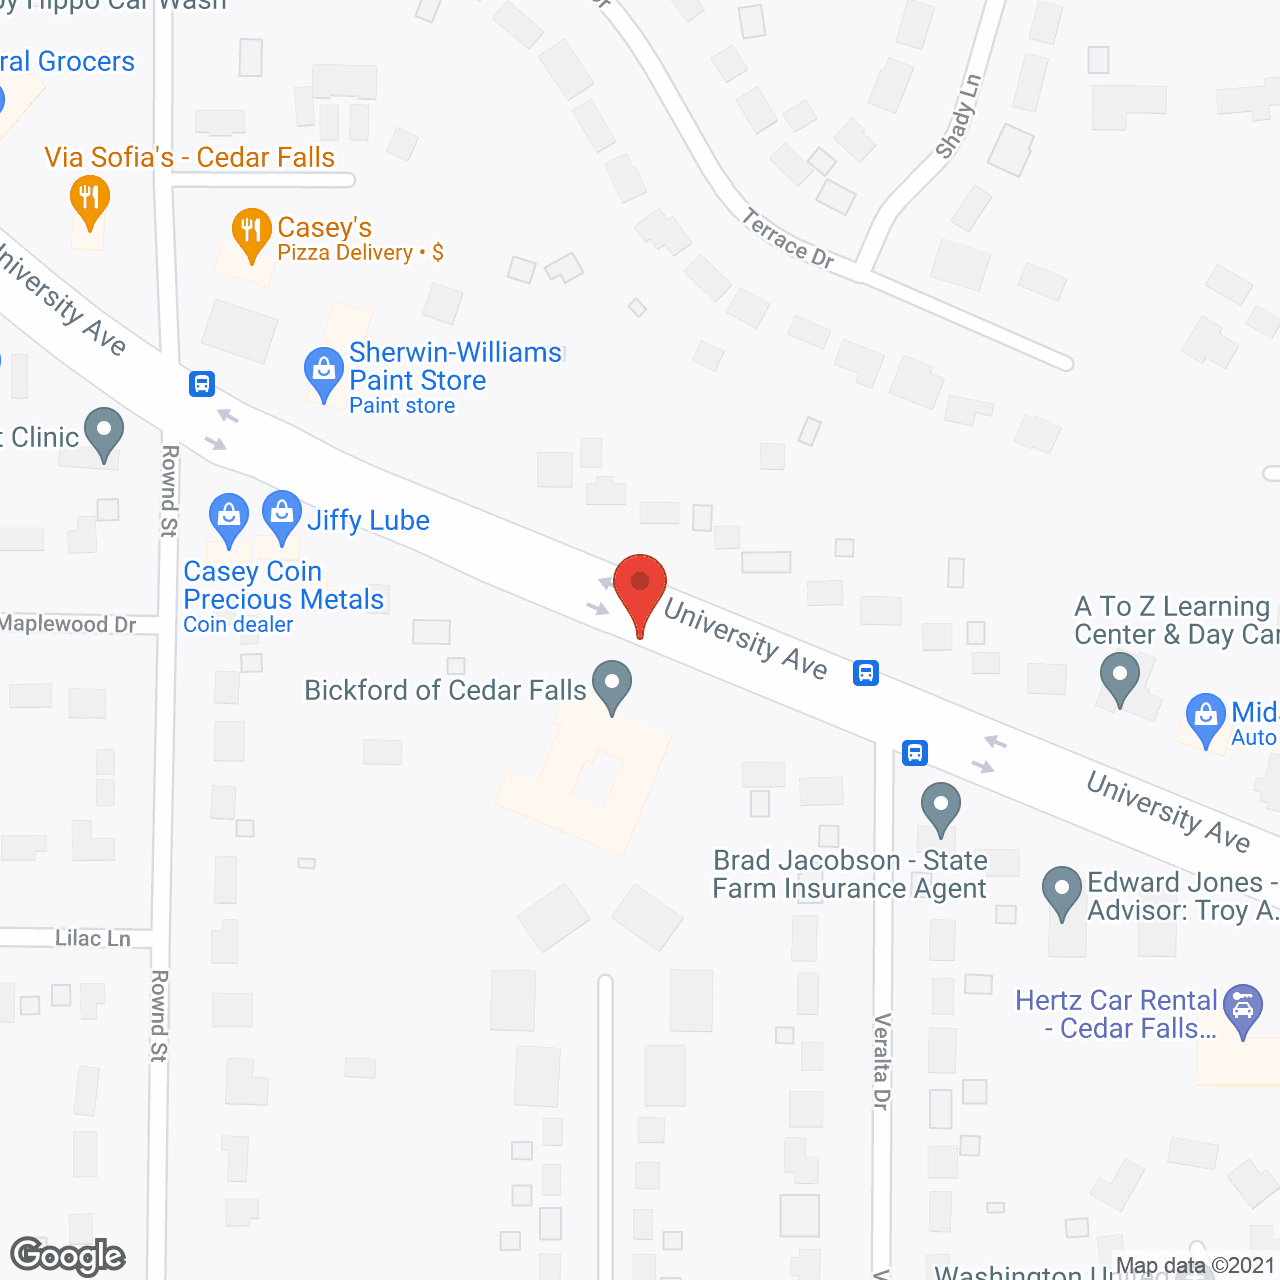 Bickford of Cedar Falls in google map